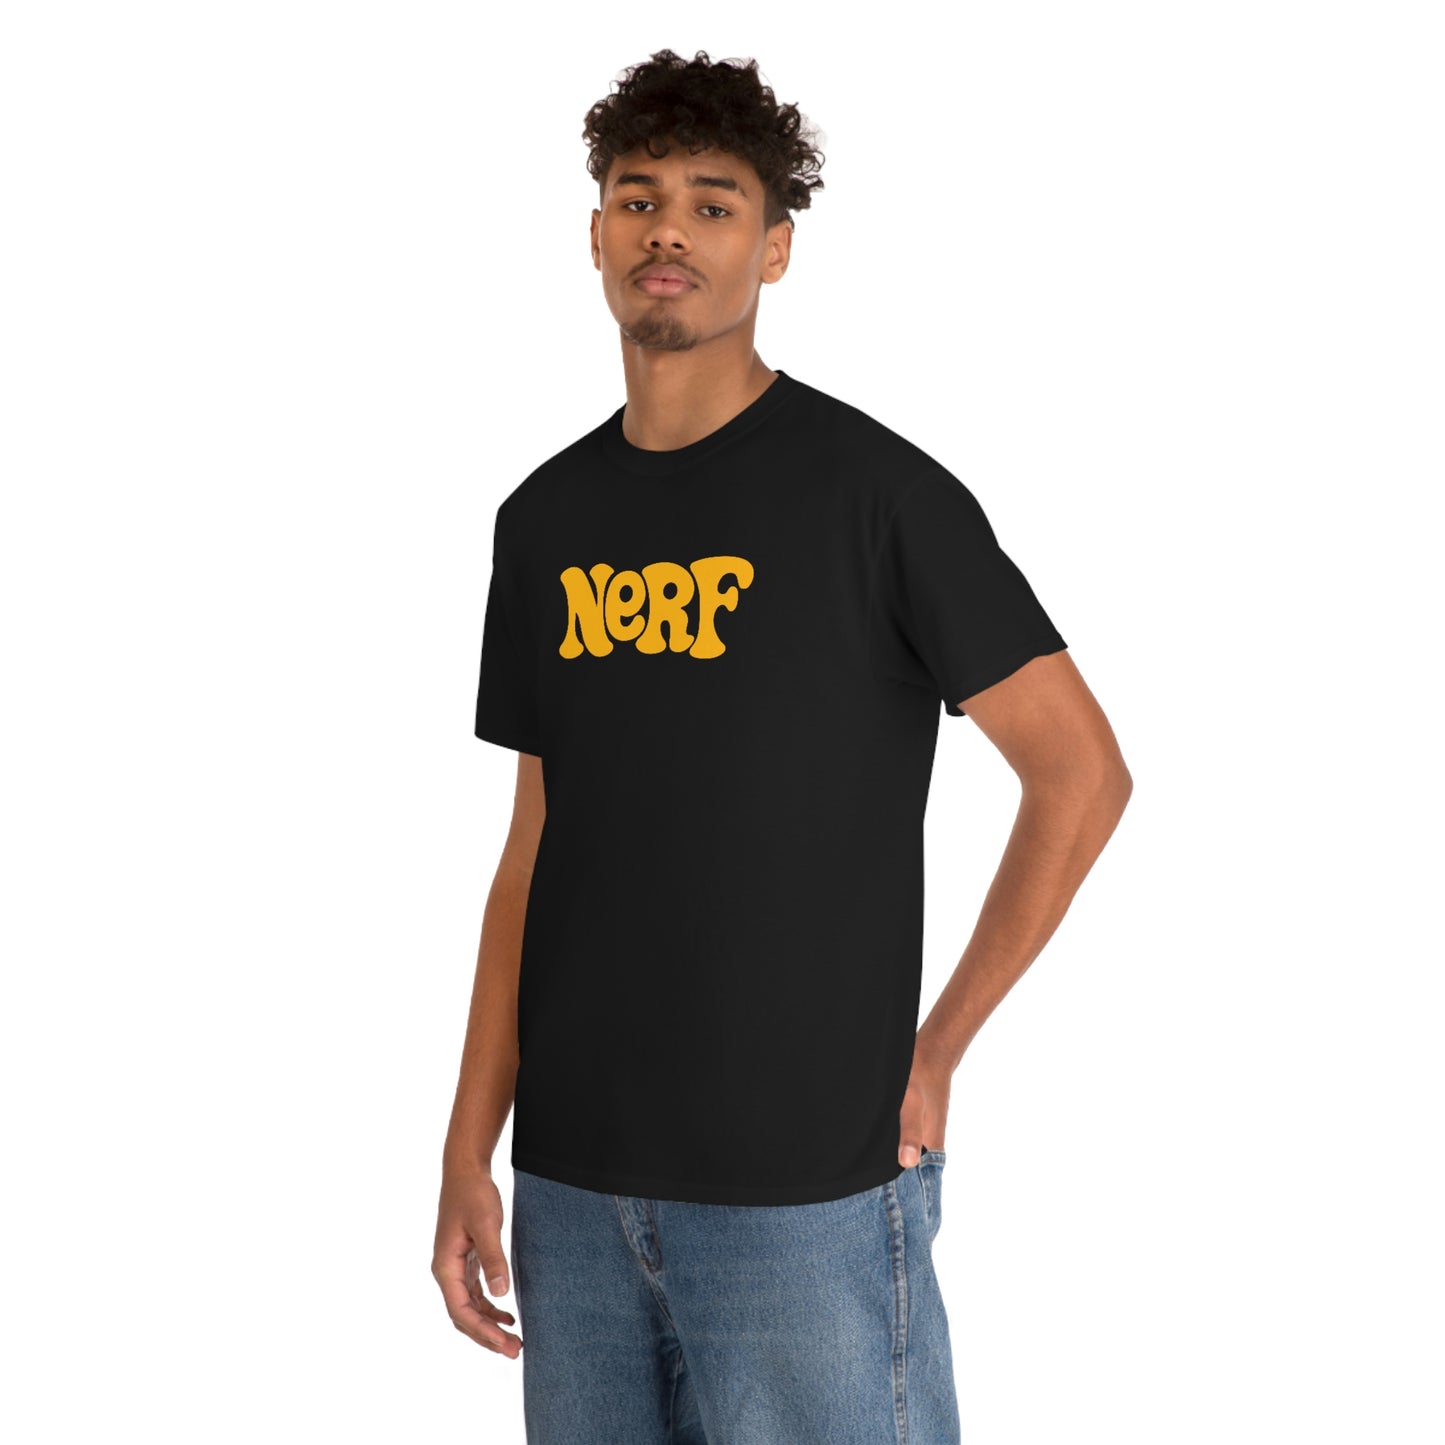 Nerf T-Shirt